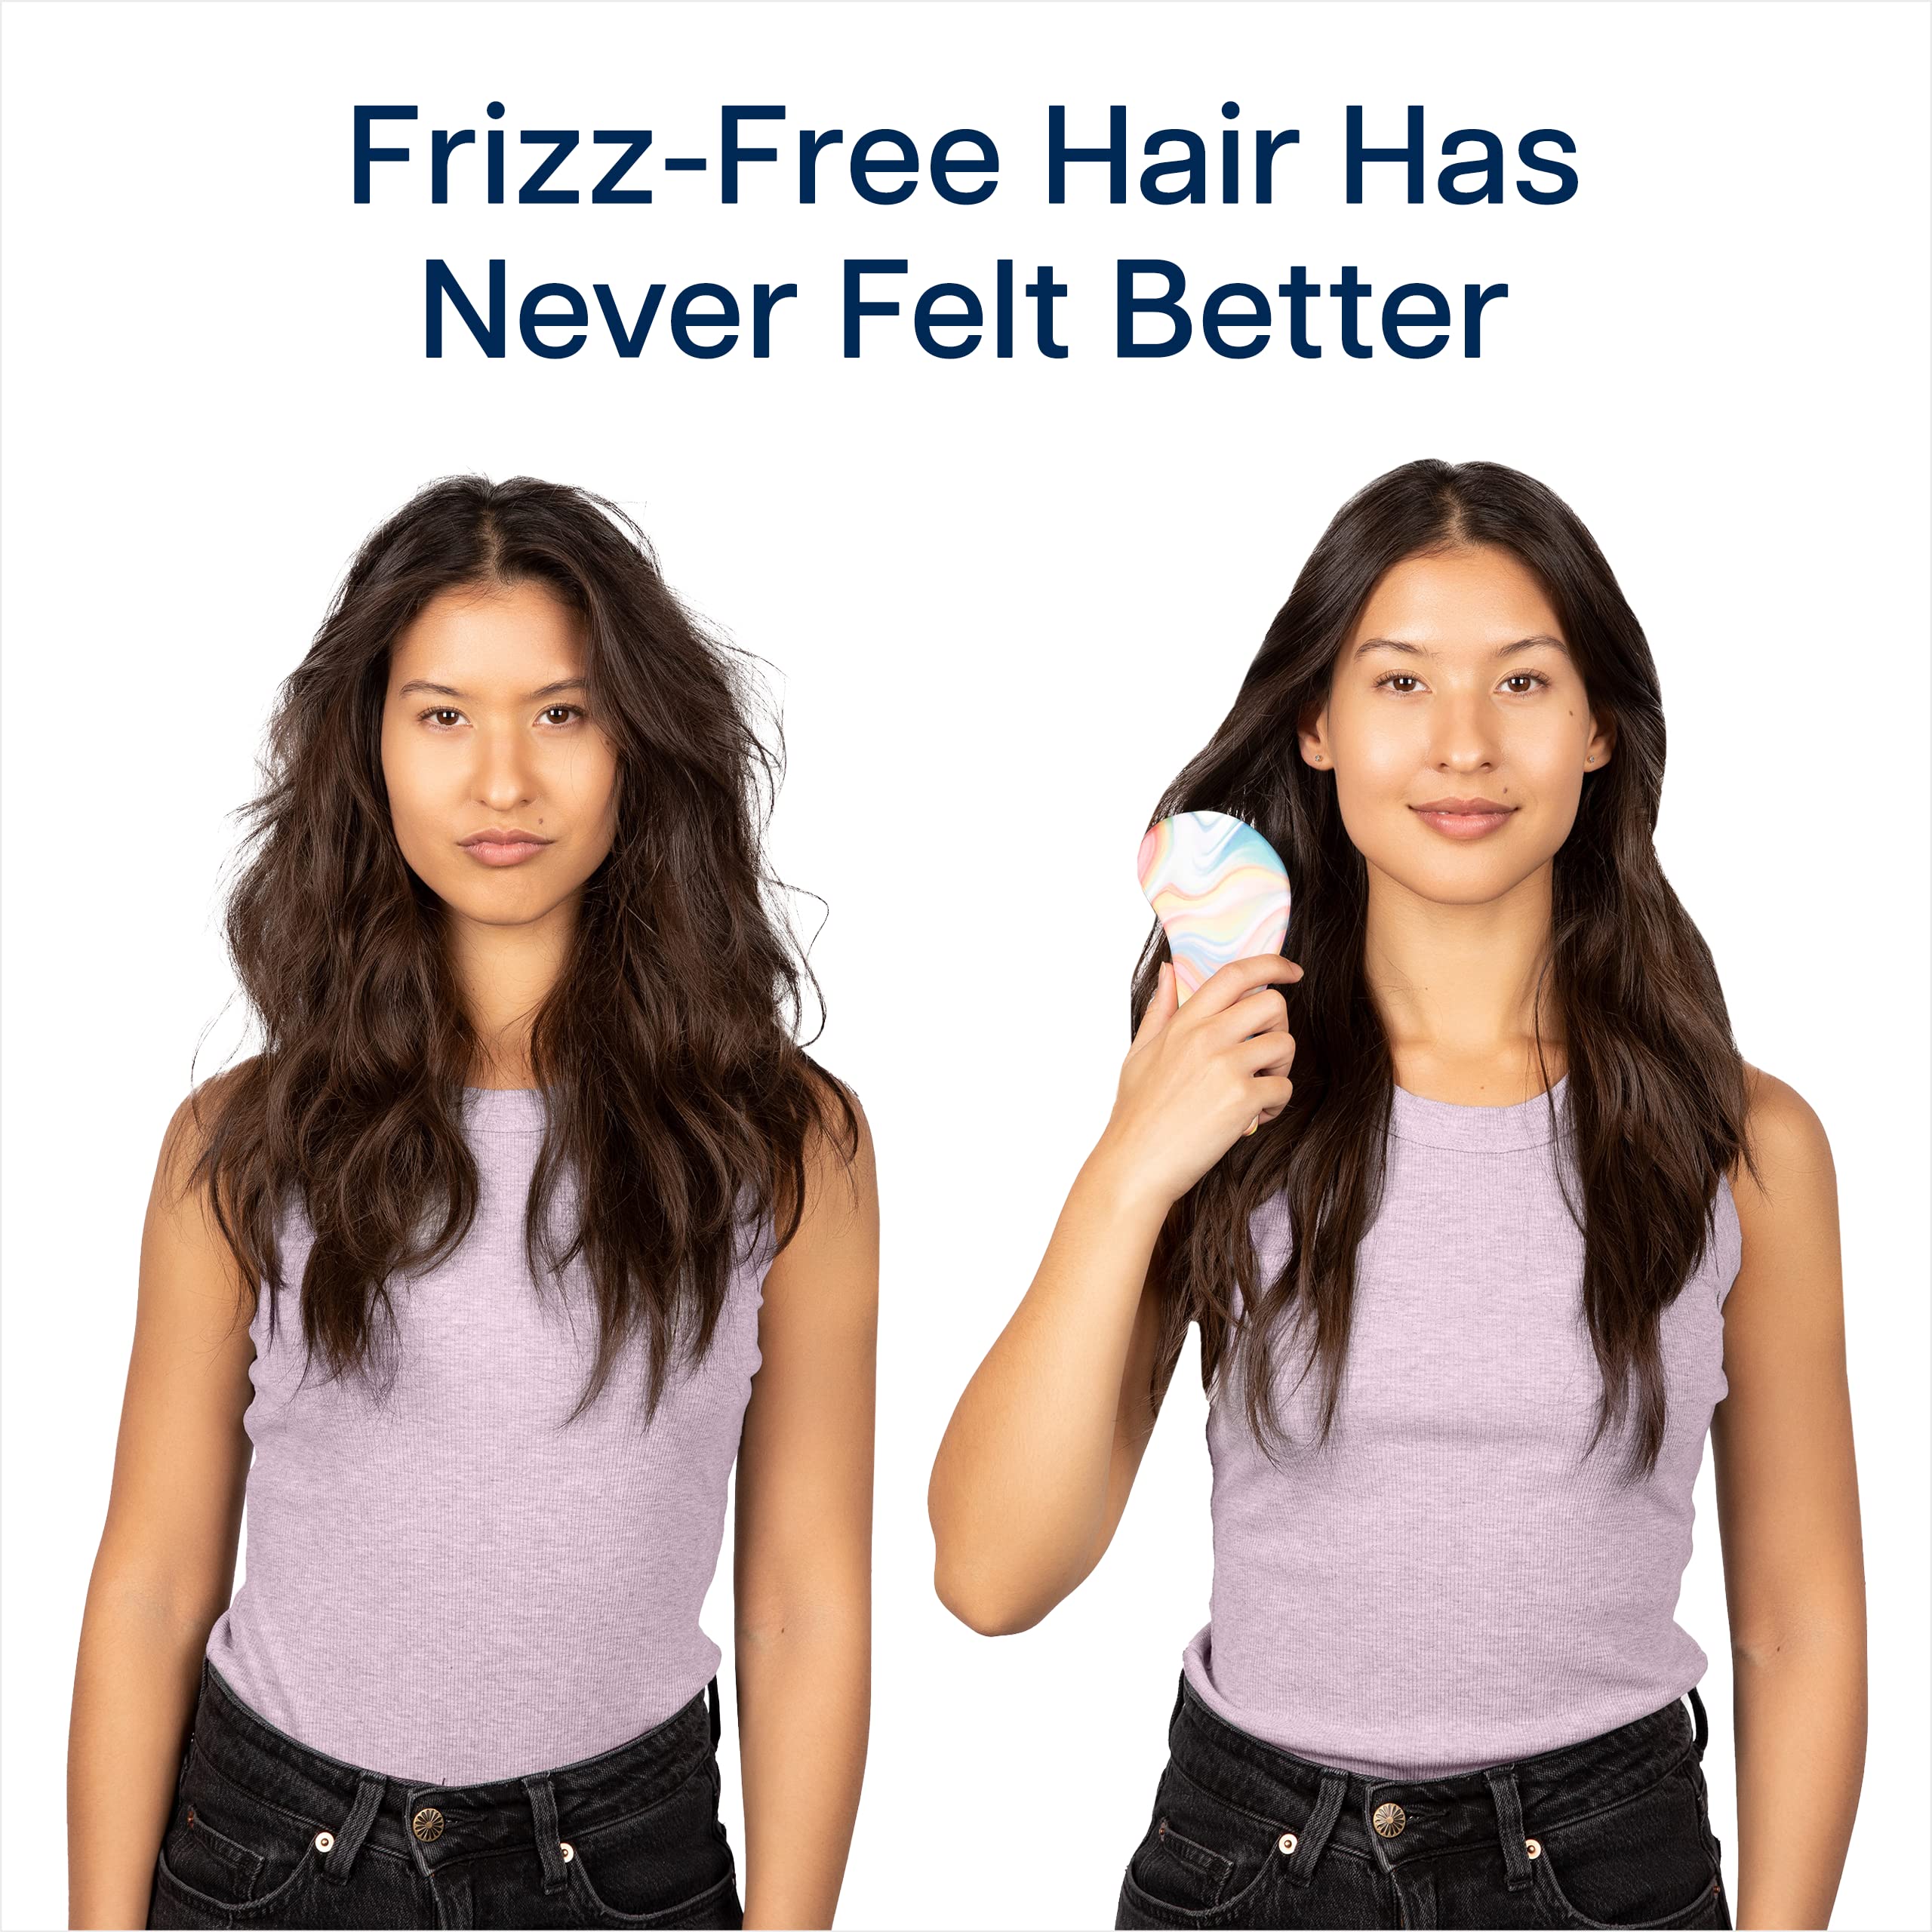 Crave Naturals Glide Thru Detangling Hair Brushes for Adults & Kids Hair - Detangler Hairbrush for Natural, Curly, Straight, Wet or Dry Hair - Hair Brushes for Women - 2 Pack - Soft Hazy Swirl & Pink